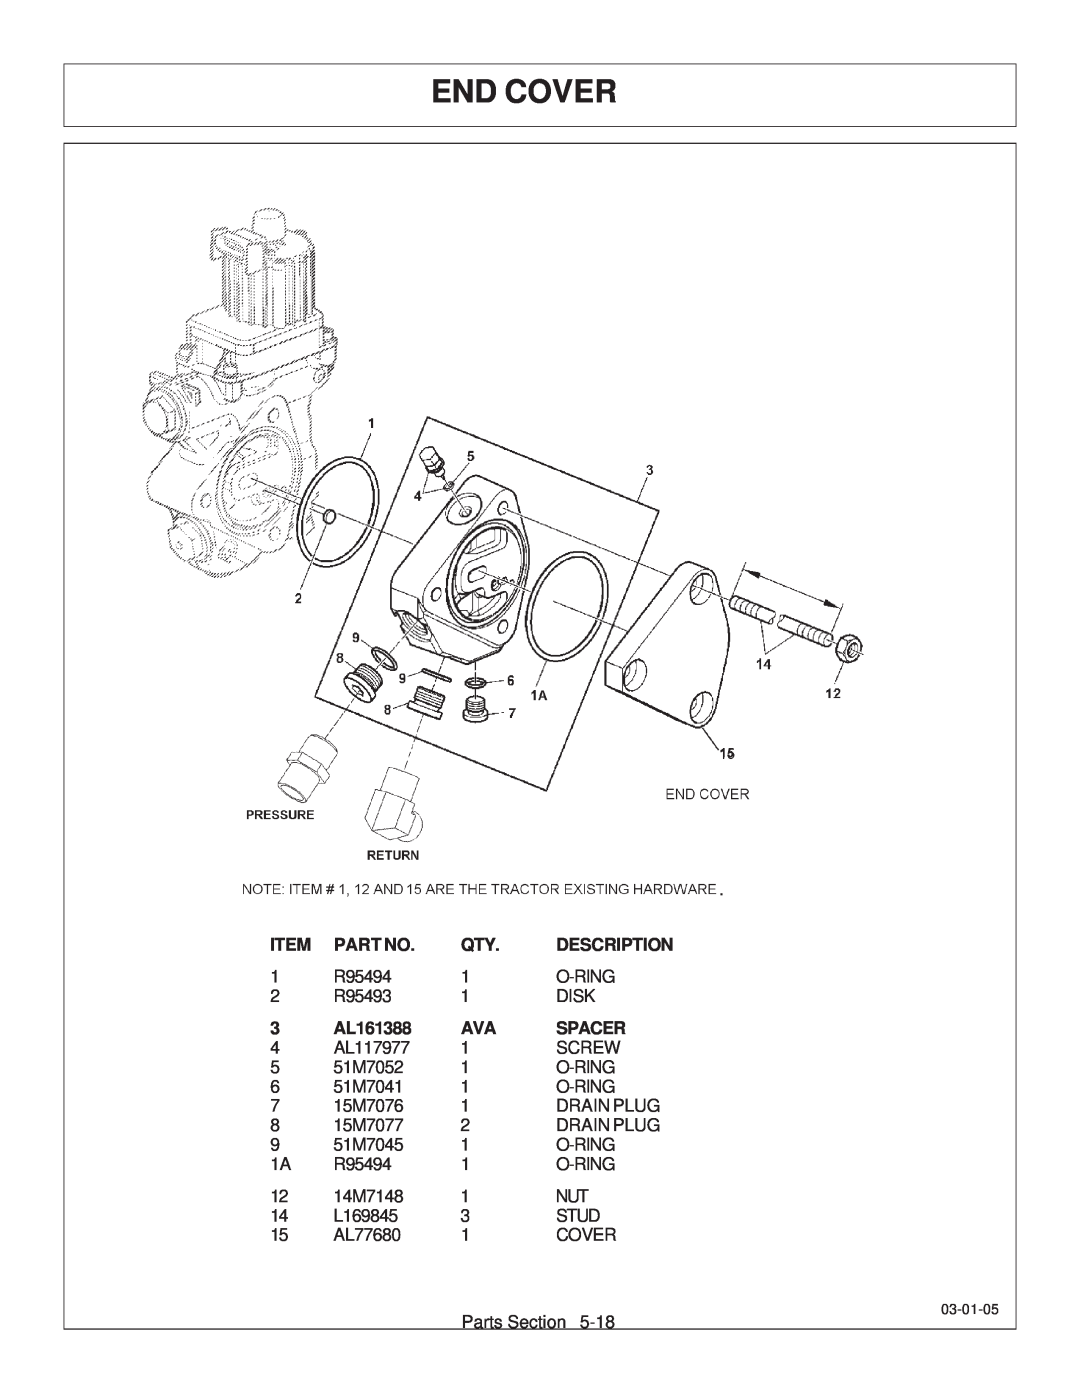 Tiger JD 62-6420 manual End Cover, Description, AL161388, Spacer 